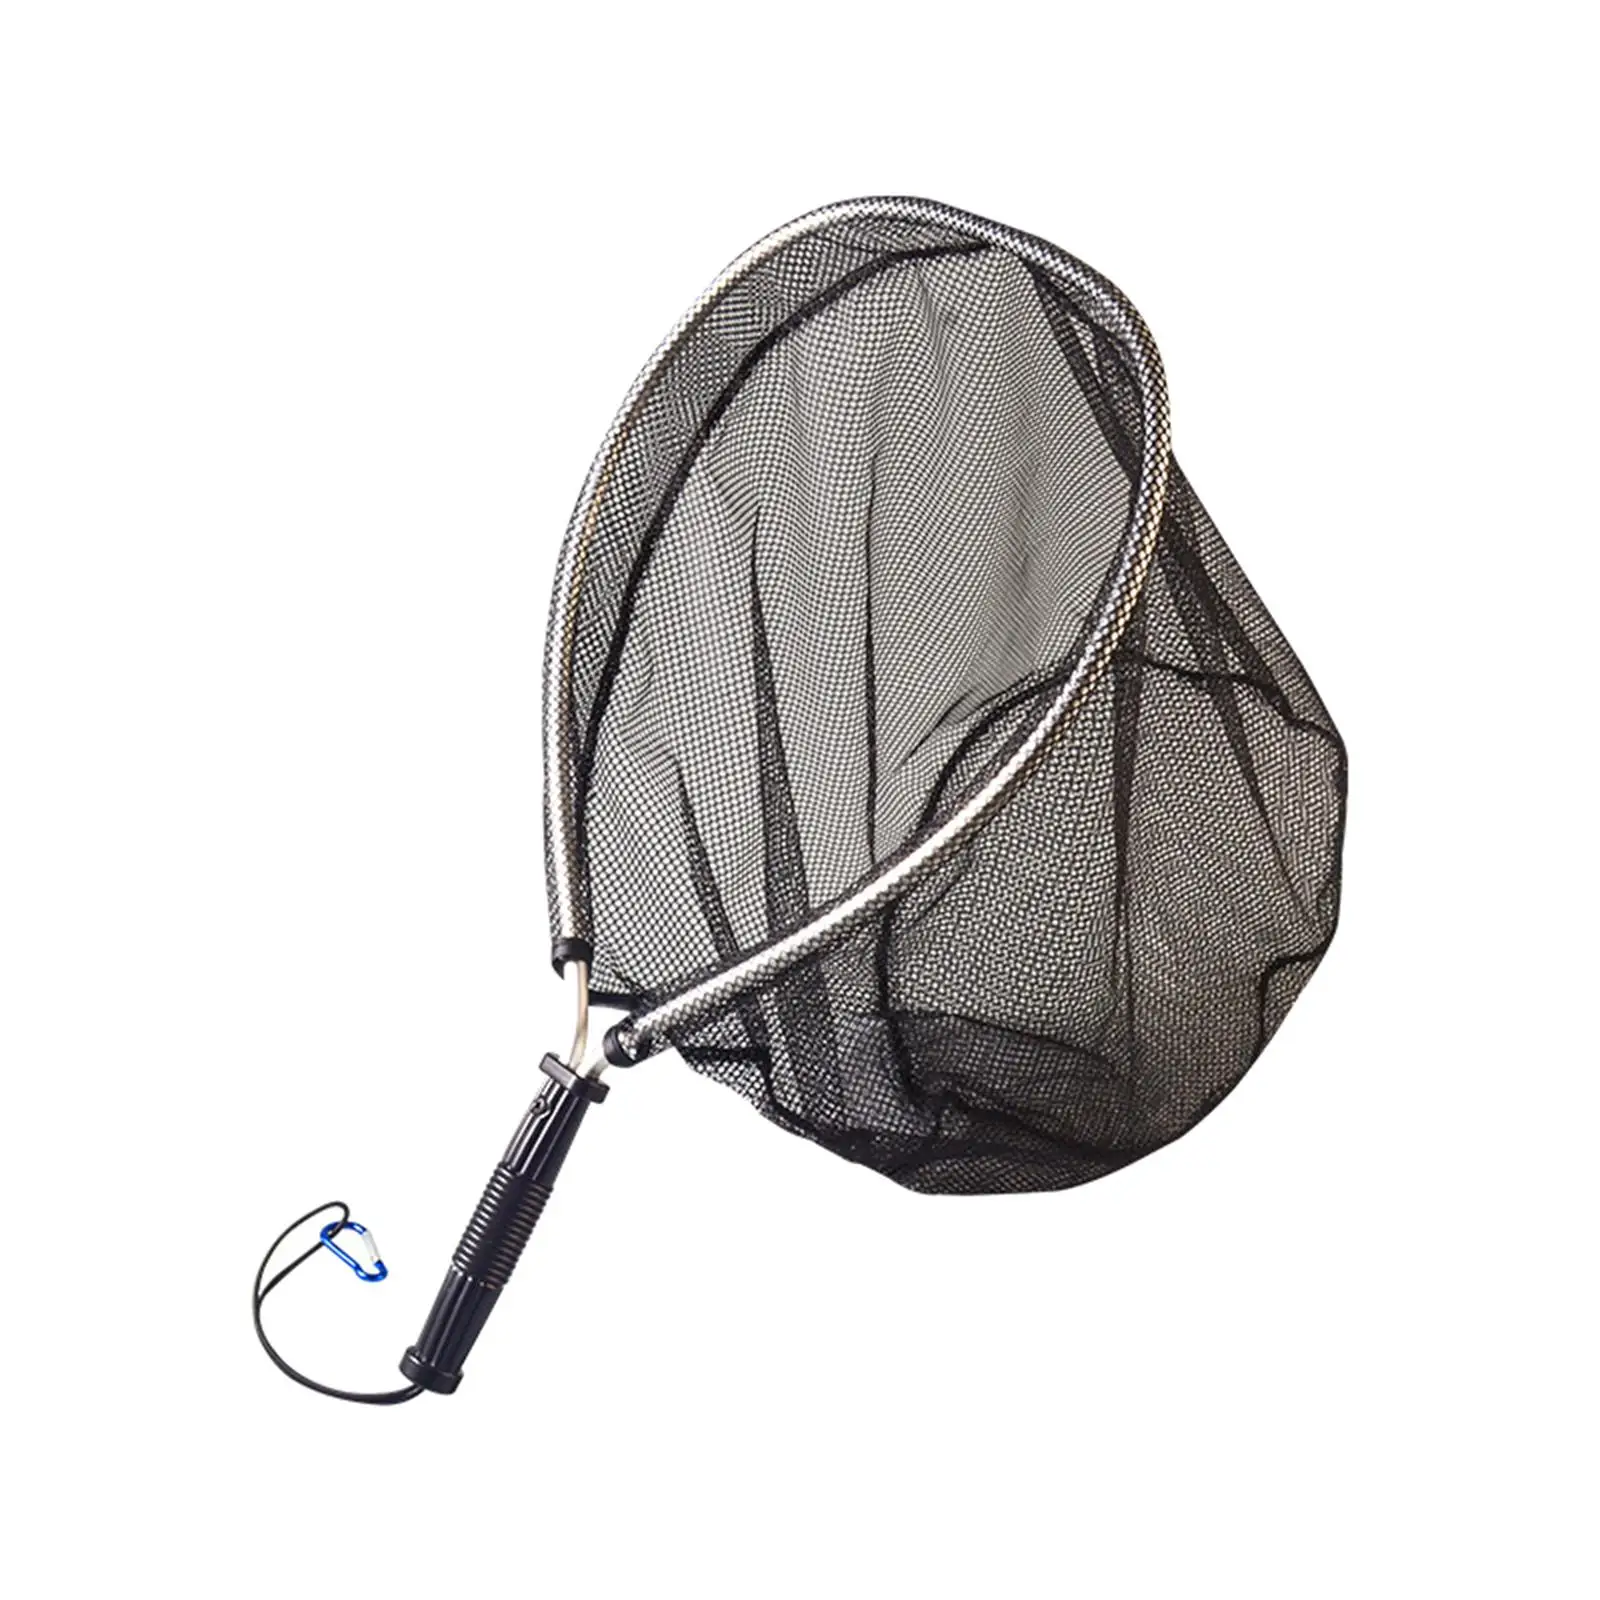 Fishing Landing Net Durable Lightweight Fishing Mesh Net Nonslip Comfortable Grip for Outdoor Boat Freshwater Saltwater Fishing